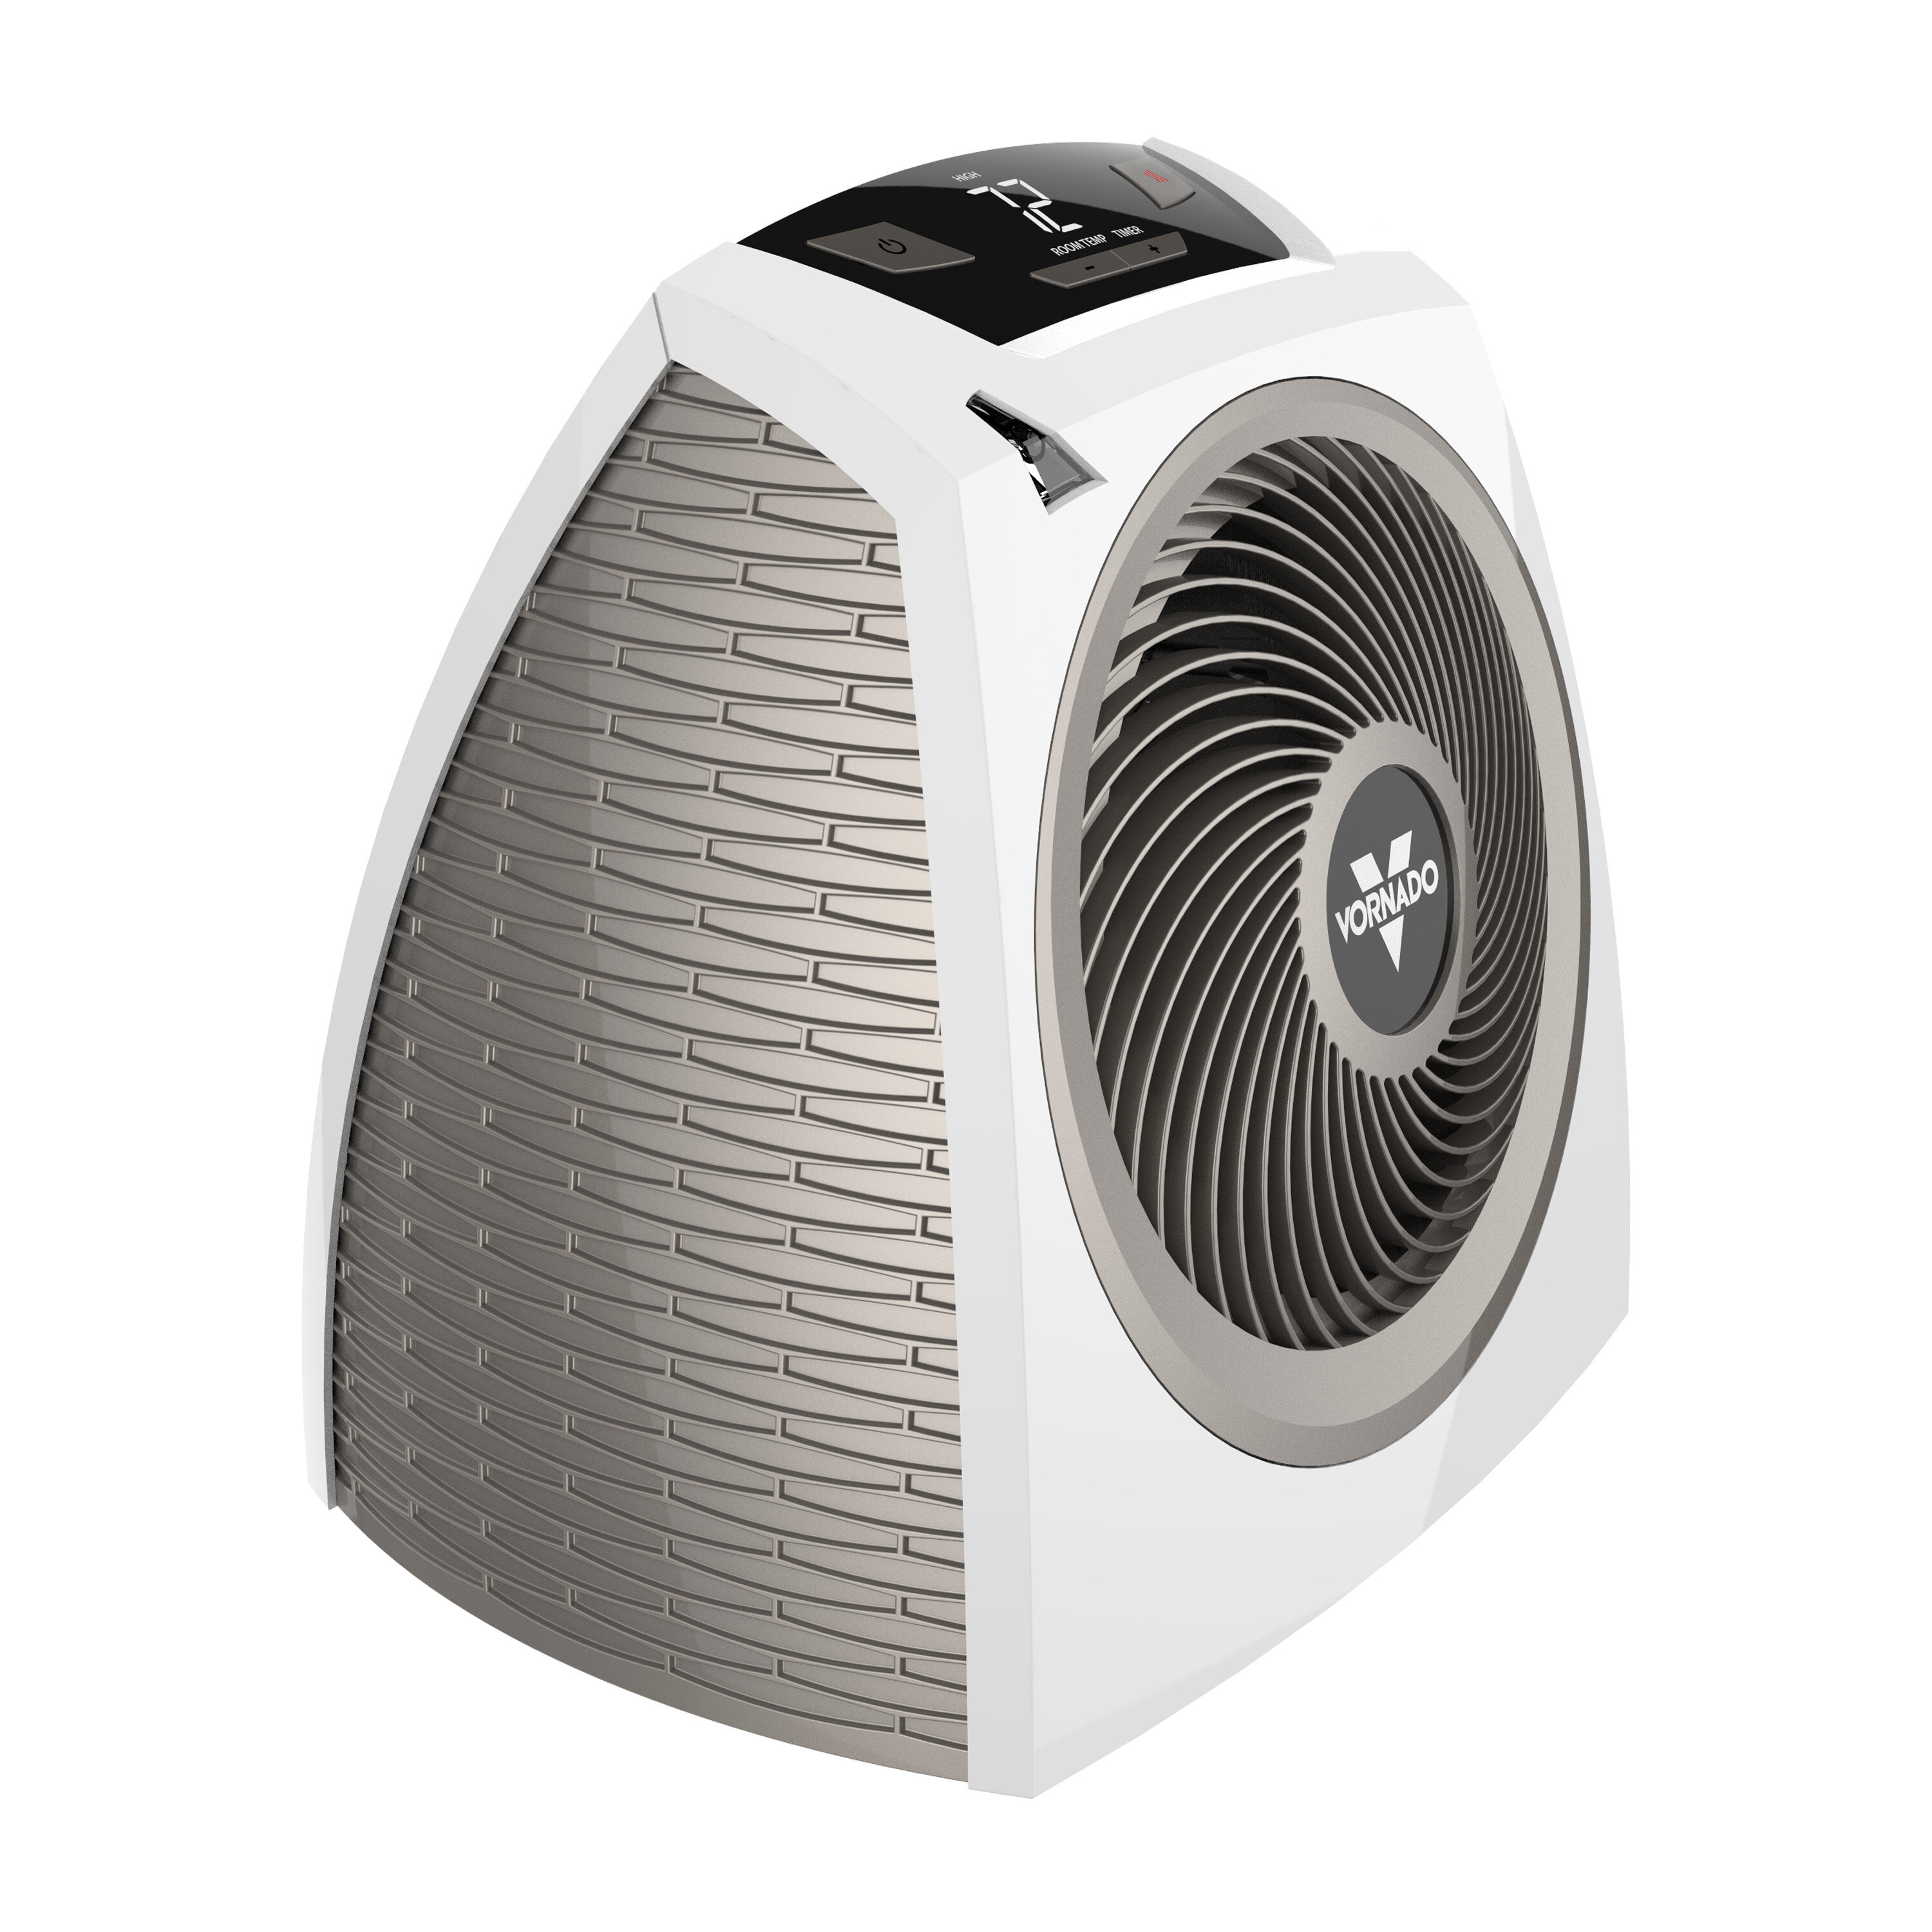 Baby Electric Fan Compact Heater Vornado Tempa